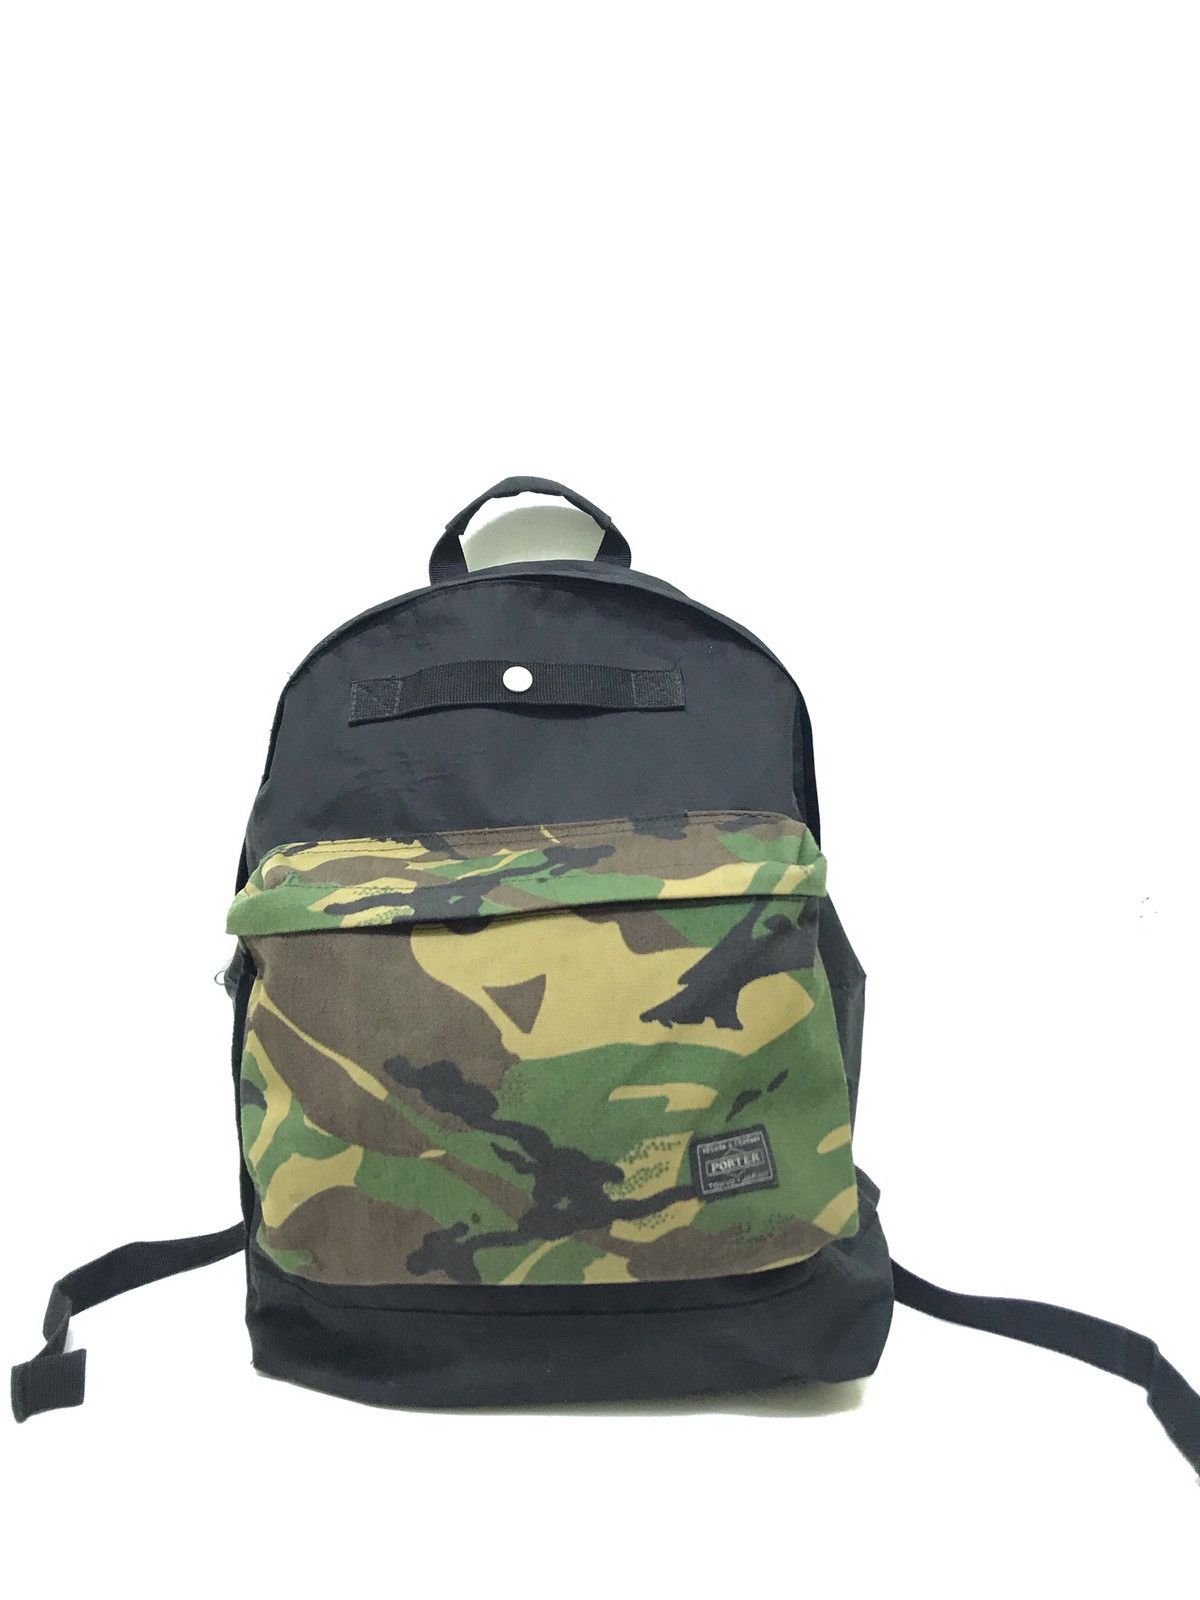 Porter 💖Head Porter Backpack Hybrid Camo Black Fit Macbook | Grailed